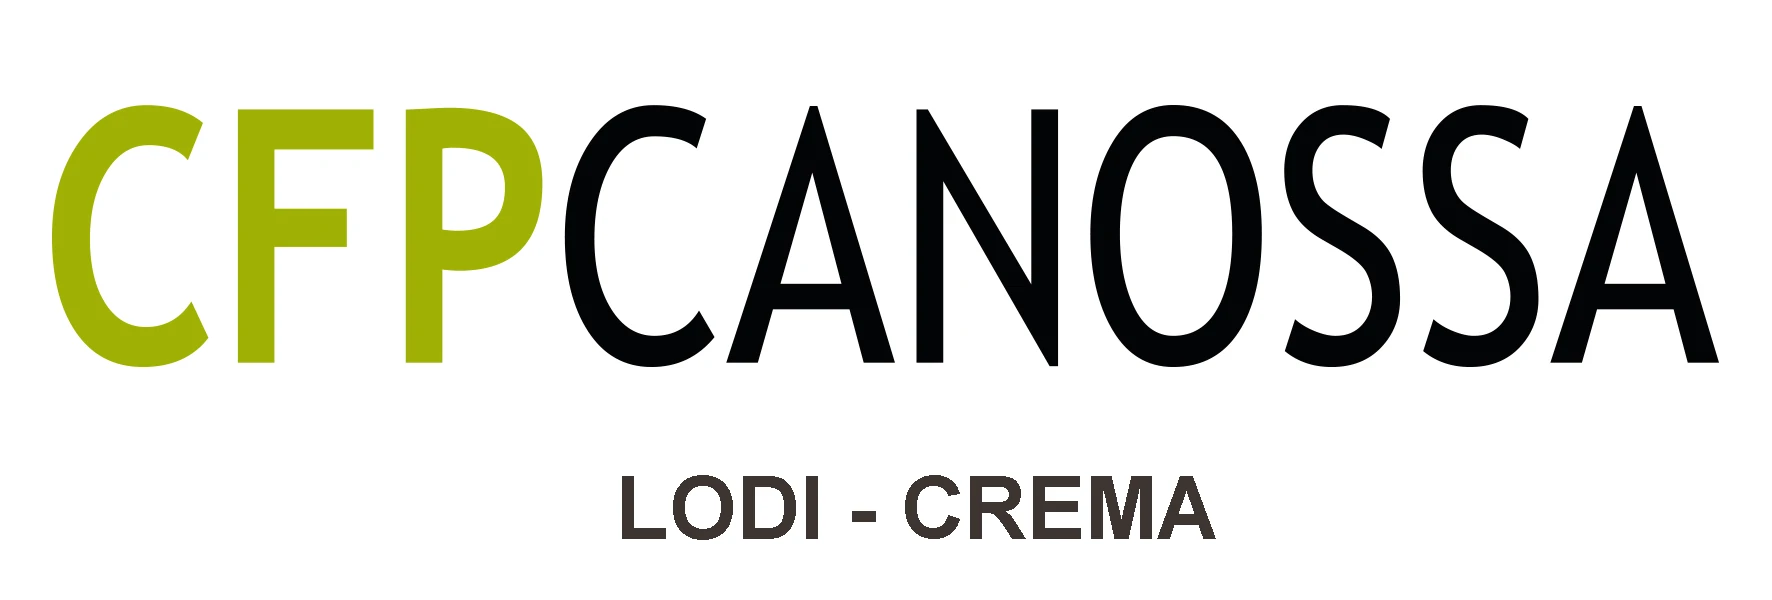 CFP Canossa Lodi/Crema